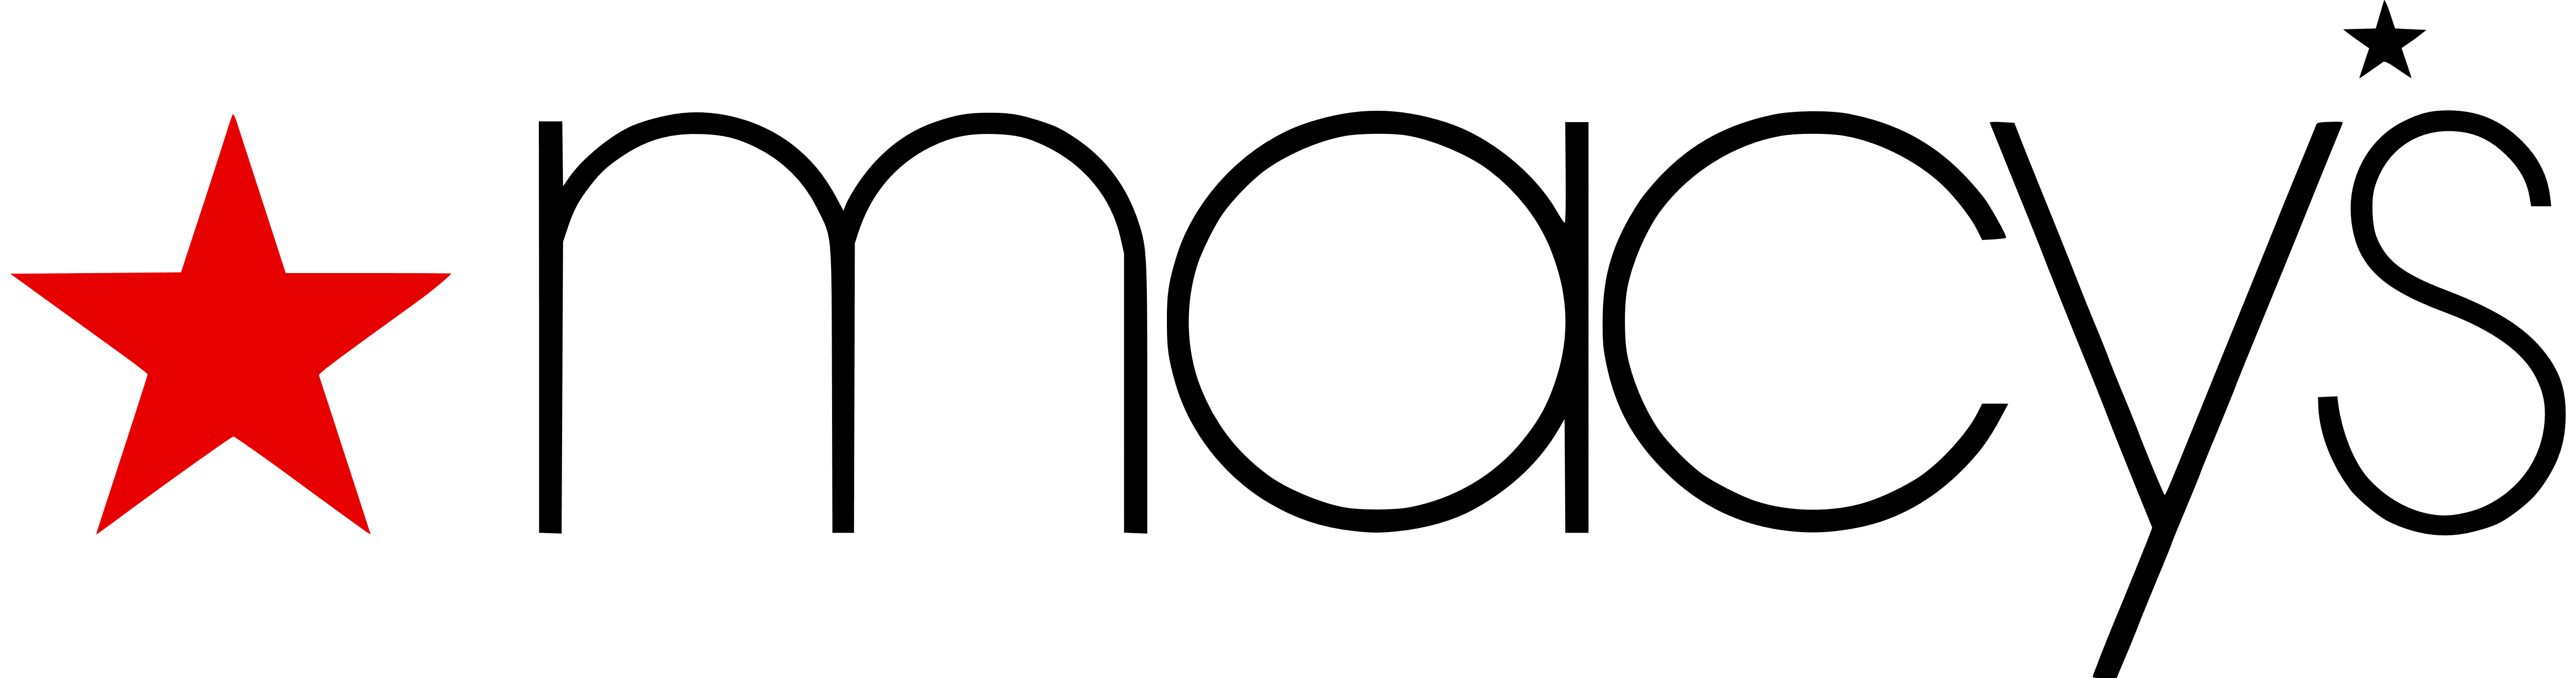 Macys logo, logotype